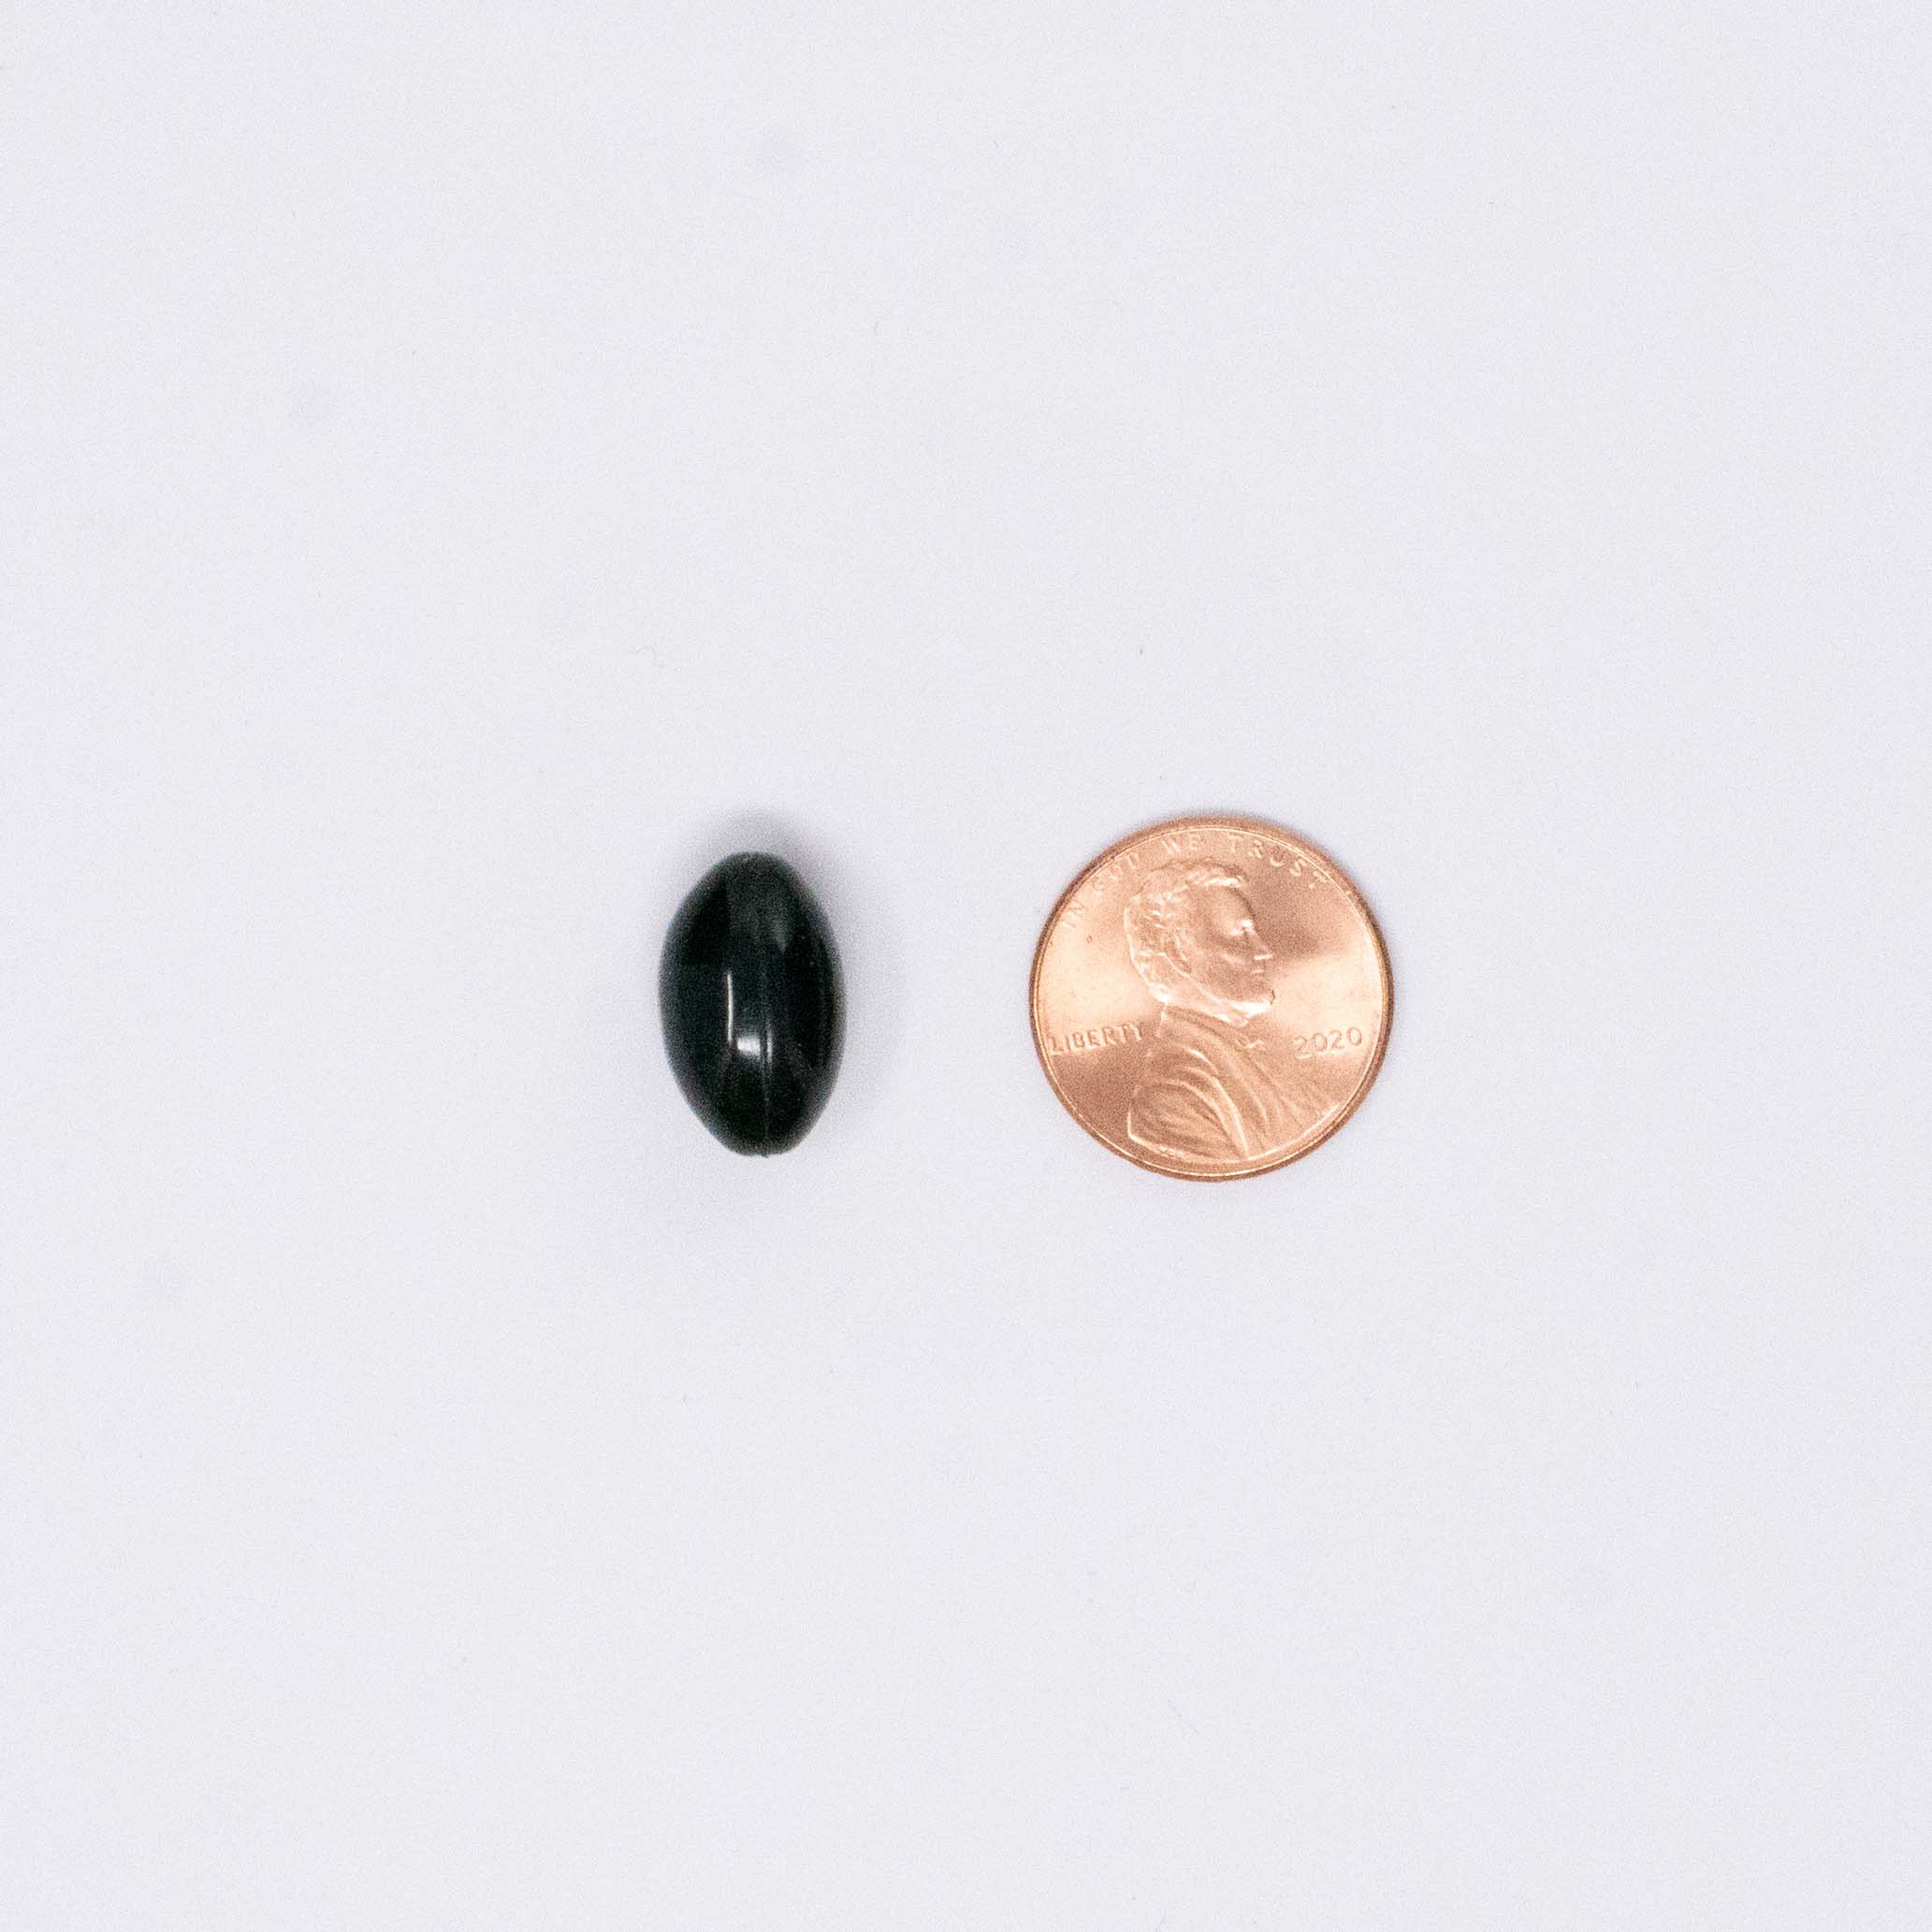 black vitamin Astaxanthin next to a penny